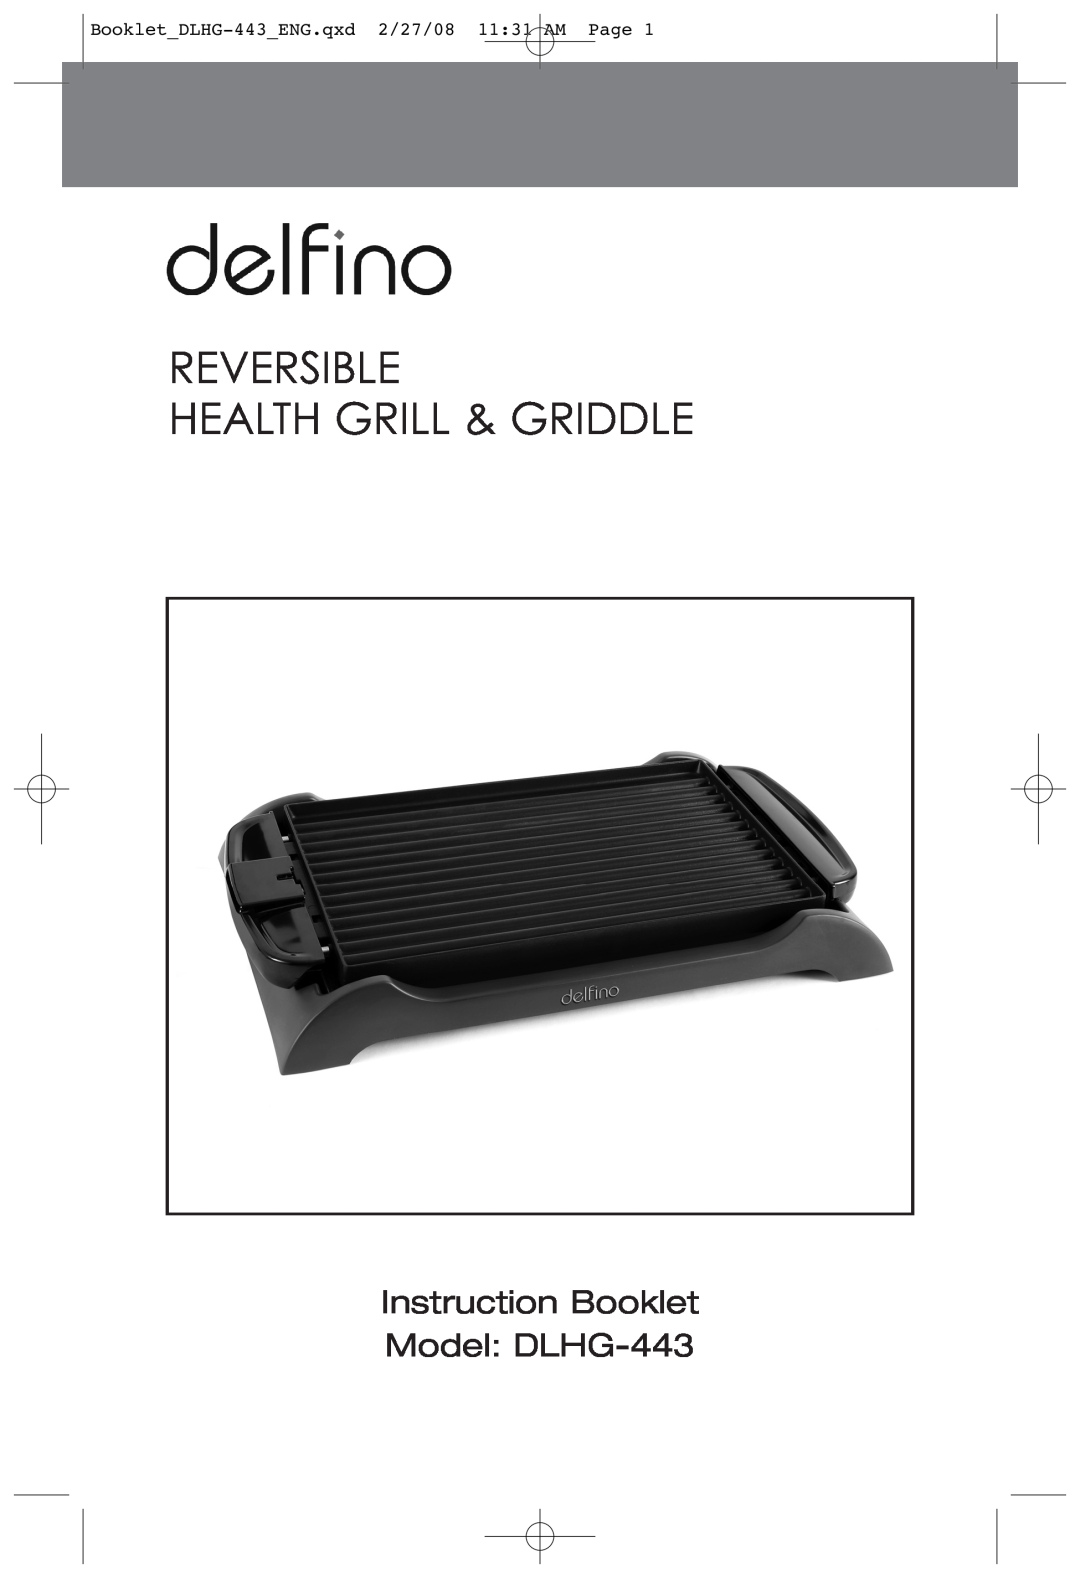 Toastess manual Instruction Booklet Model DLHG-443, Reversible Health Grill & Griddle 